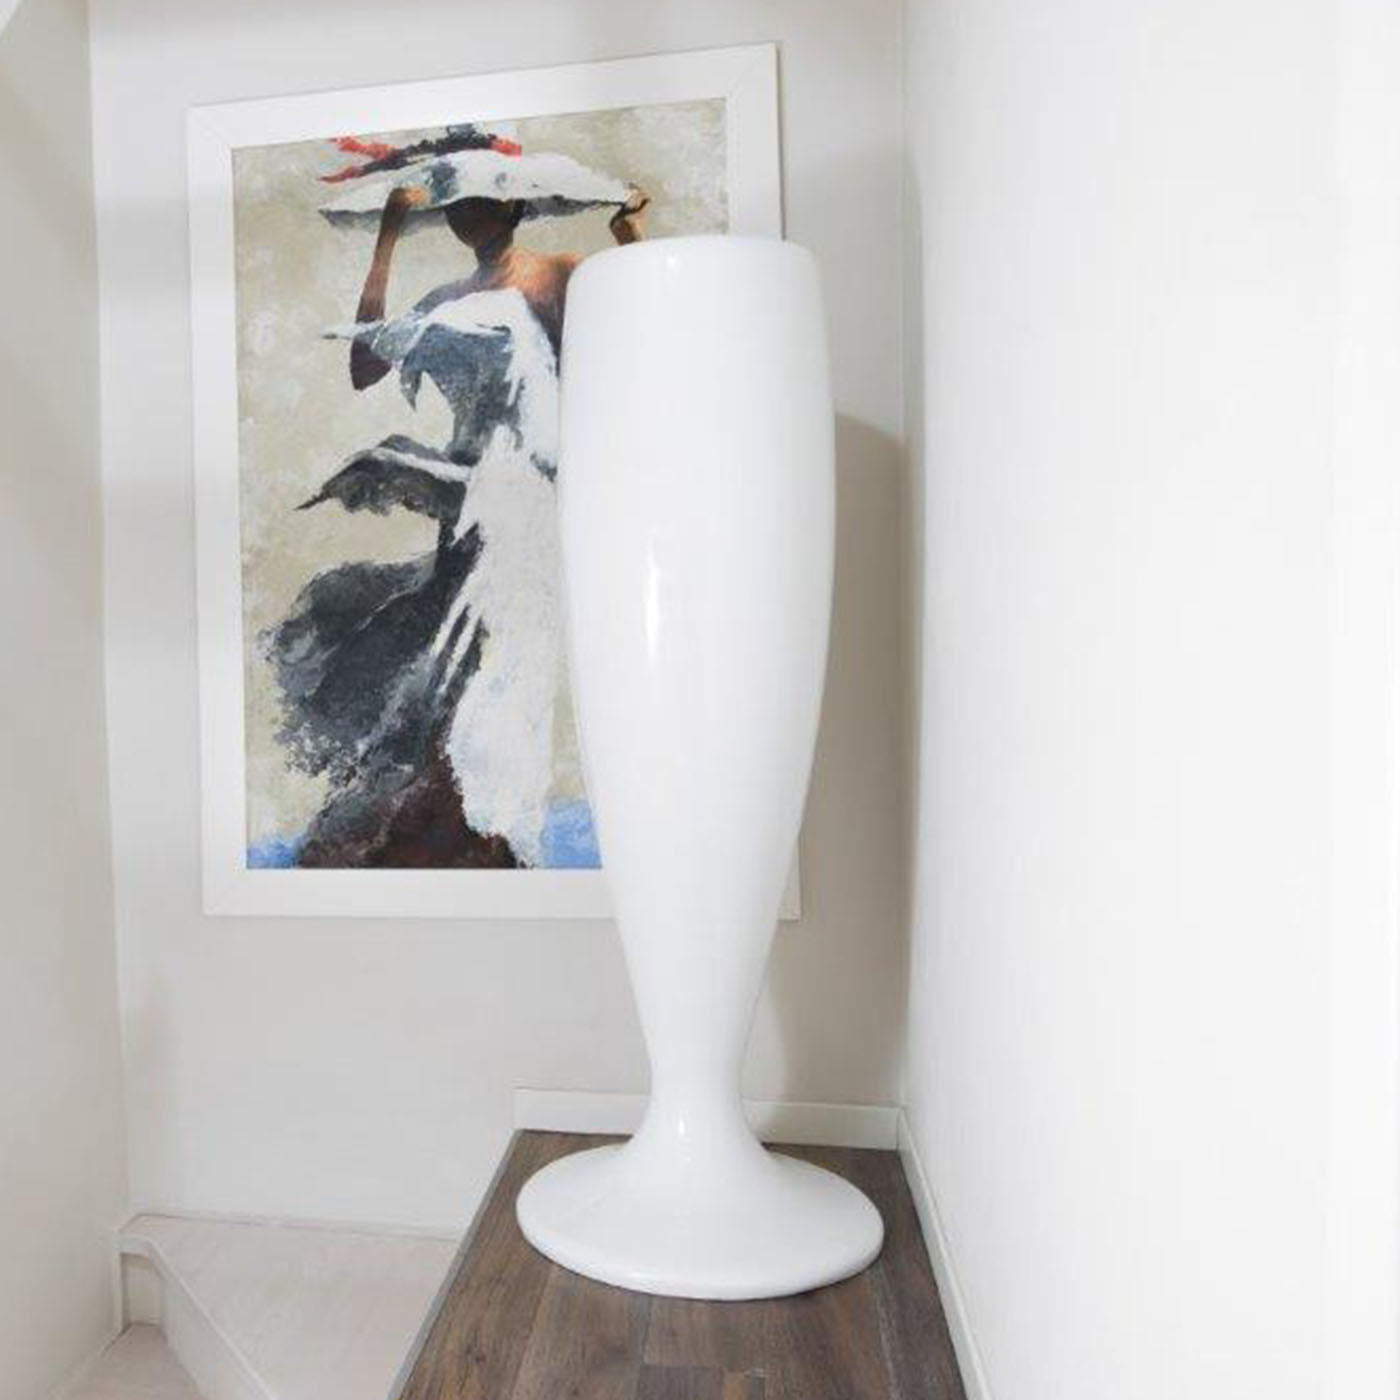 FoRMA Iperbole Flute-Like White Vase by Simone Micheli - Alternative view 1